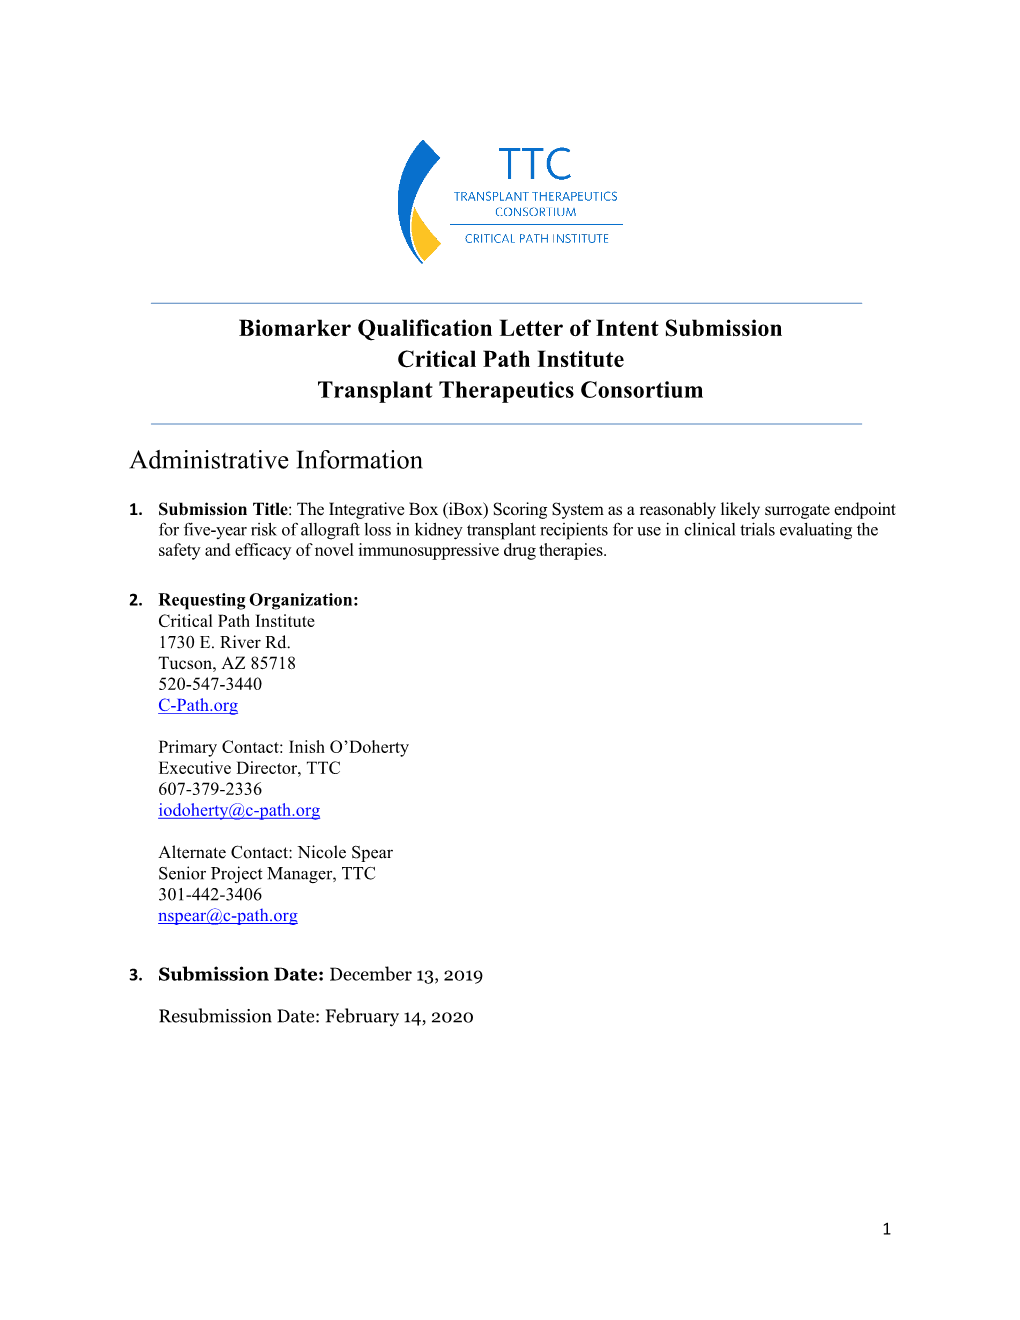 Biomarker Qualification Letter of Intent Submission Critical Path Institute Transplant Therapeutics Consortium